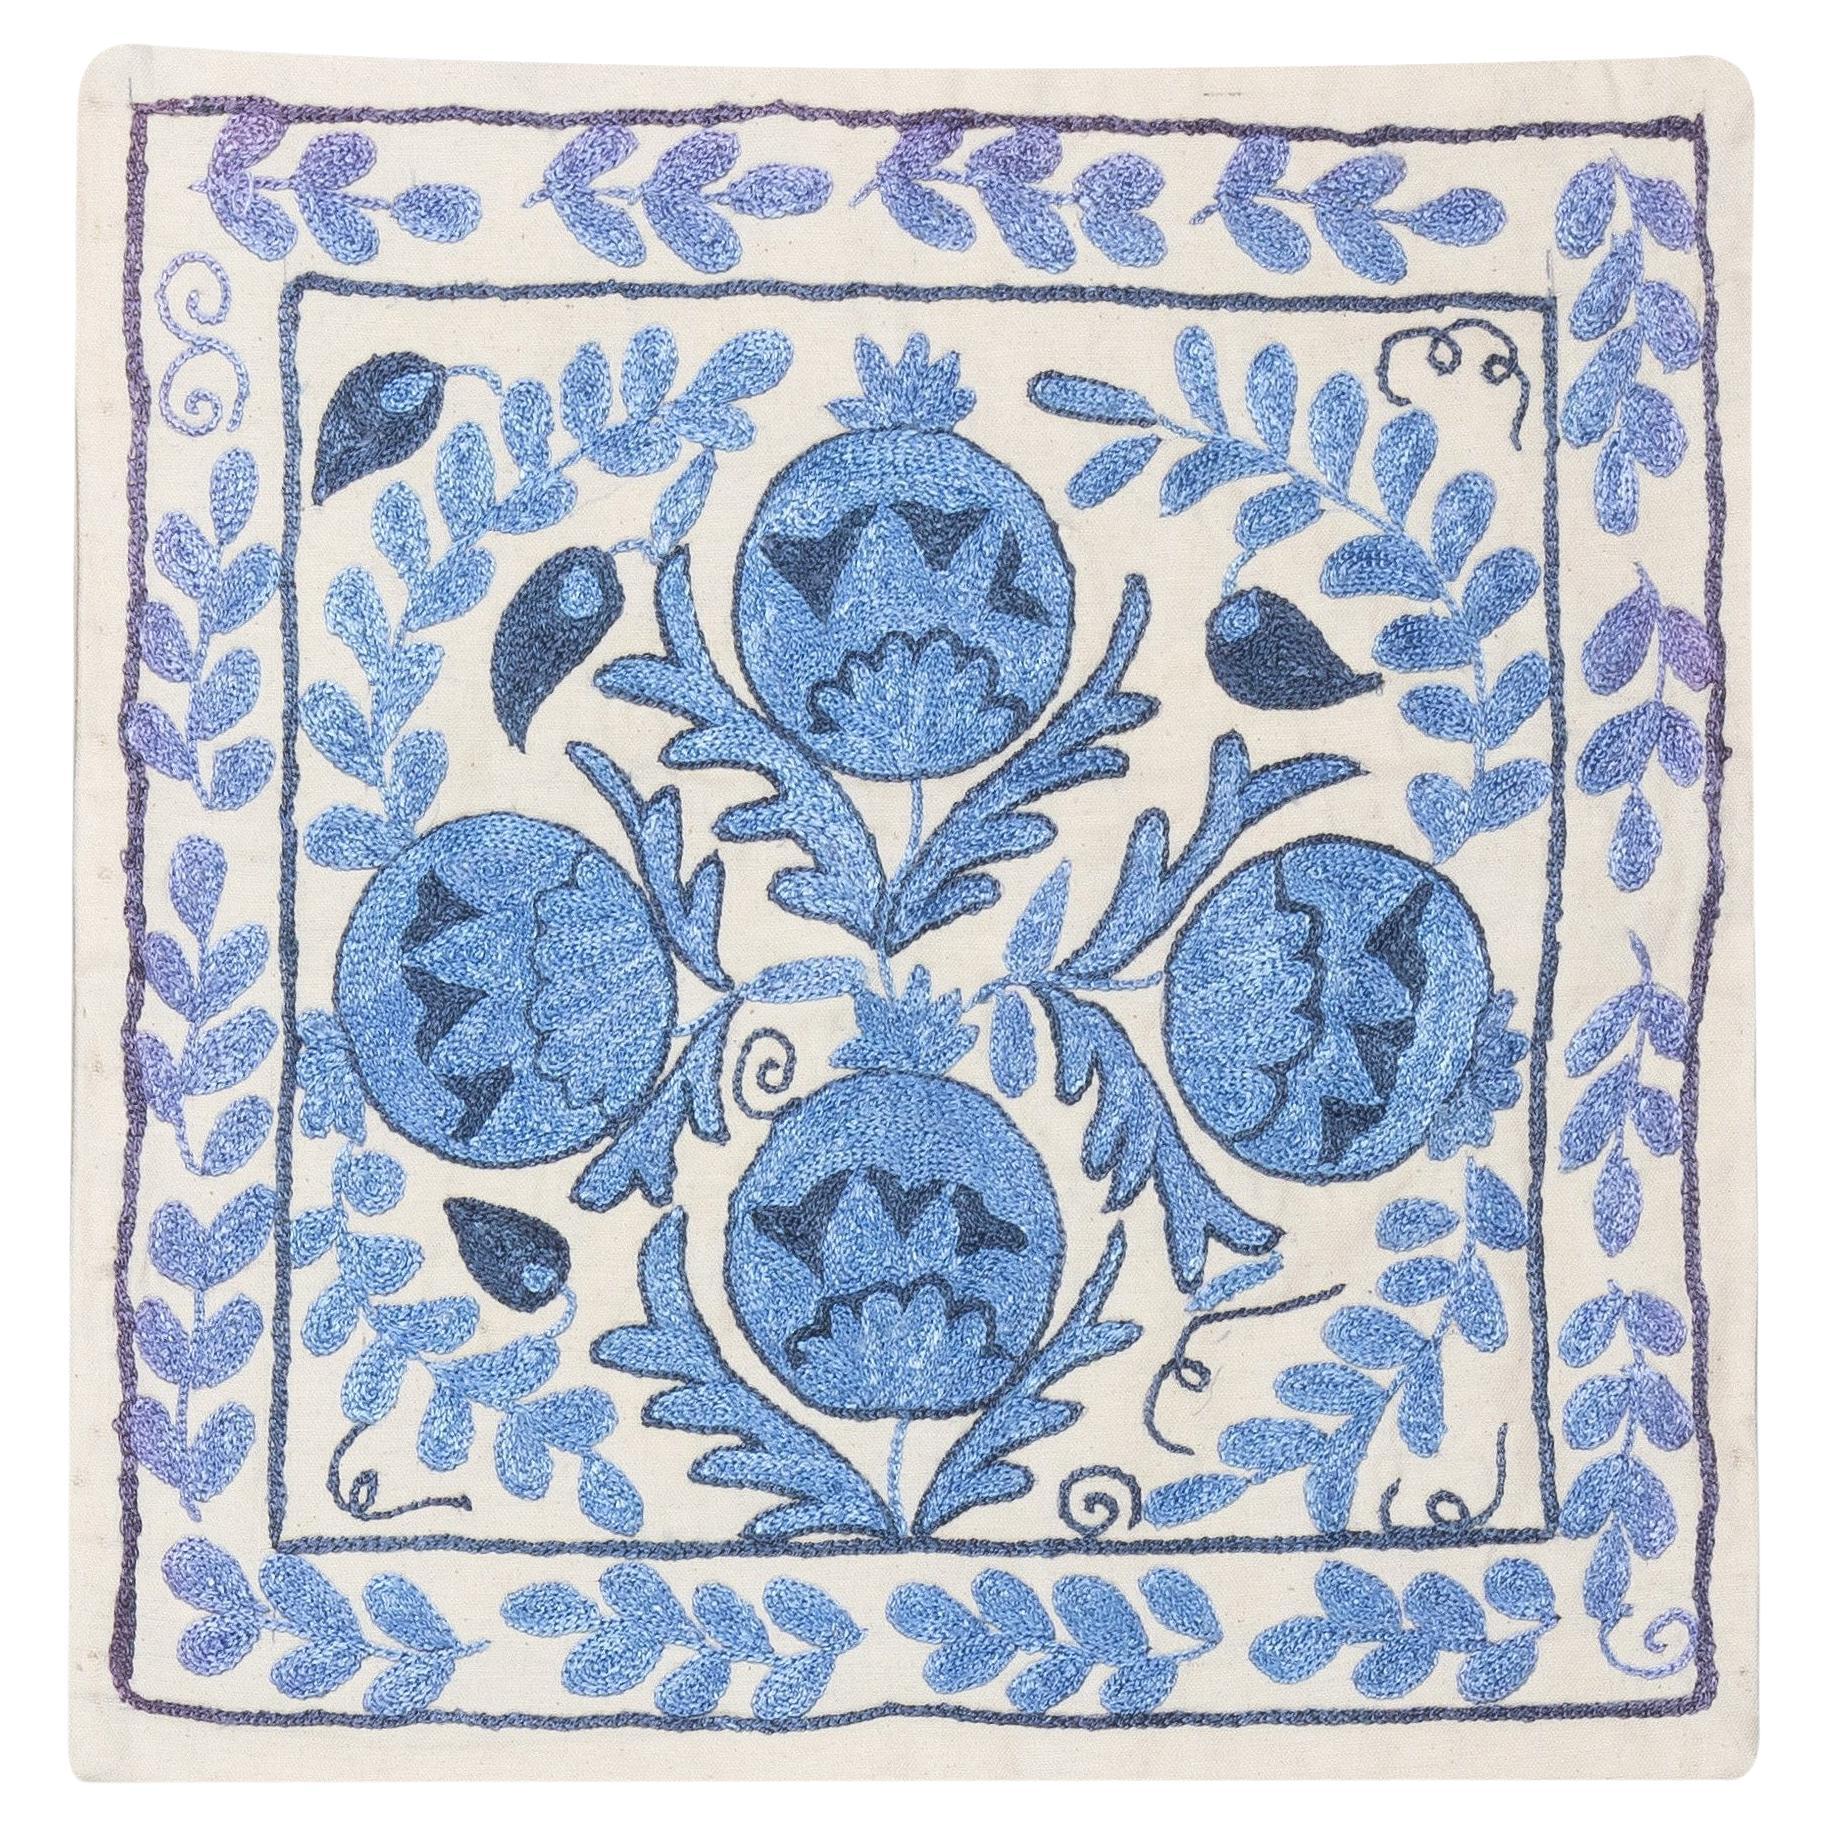 17"x17" Decorative Silk Embroidery Suzani Cushion Cover in Cream and Light Blue